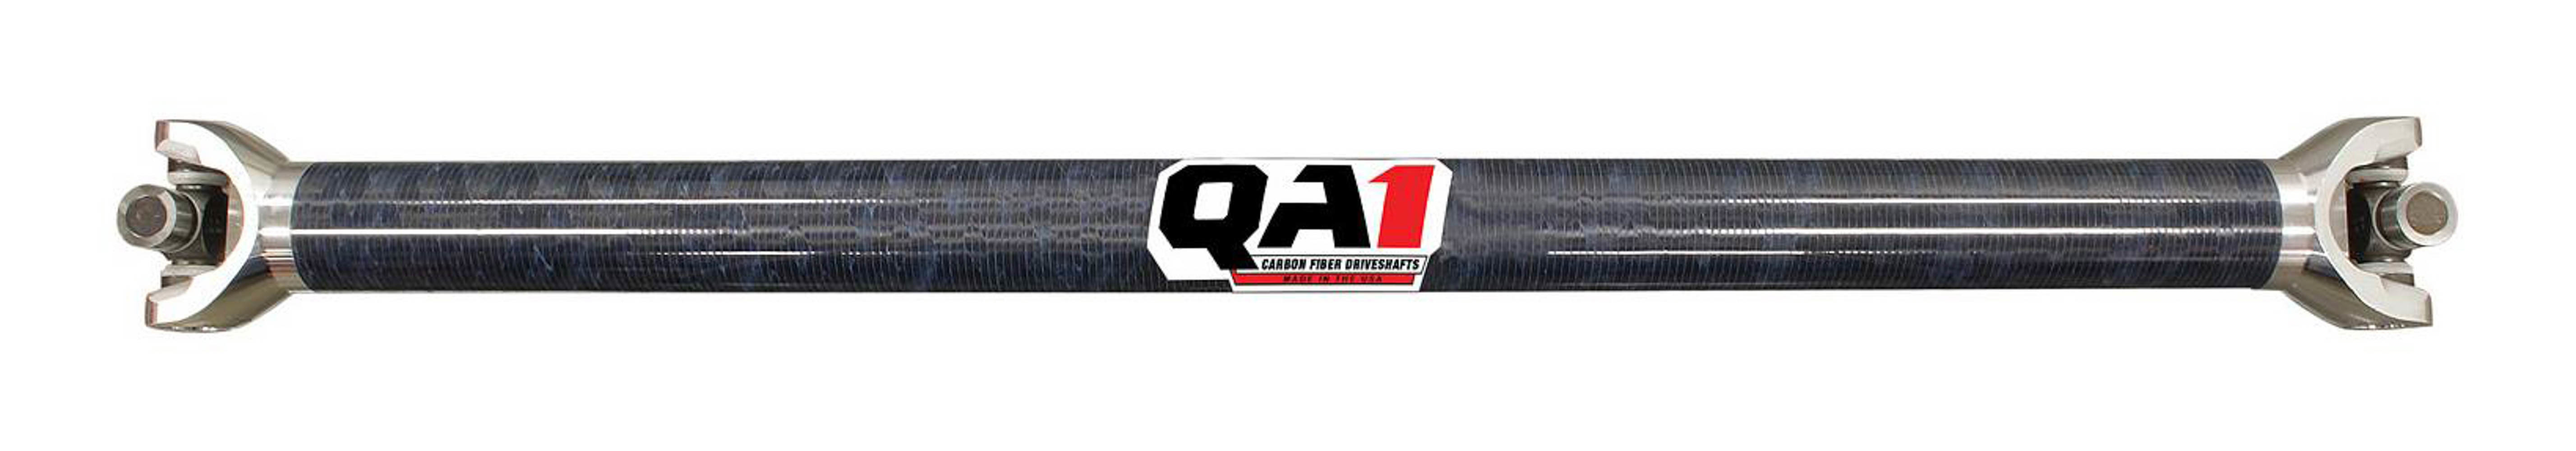 QA1 JJ-11221 Drive Shaft, Dirt Late Model, 38 in Long, 2.25 in OD, 1310 U-Joints, Carbon Fiber, Universal, Each